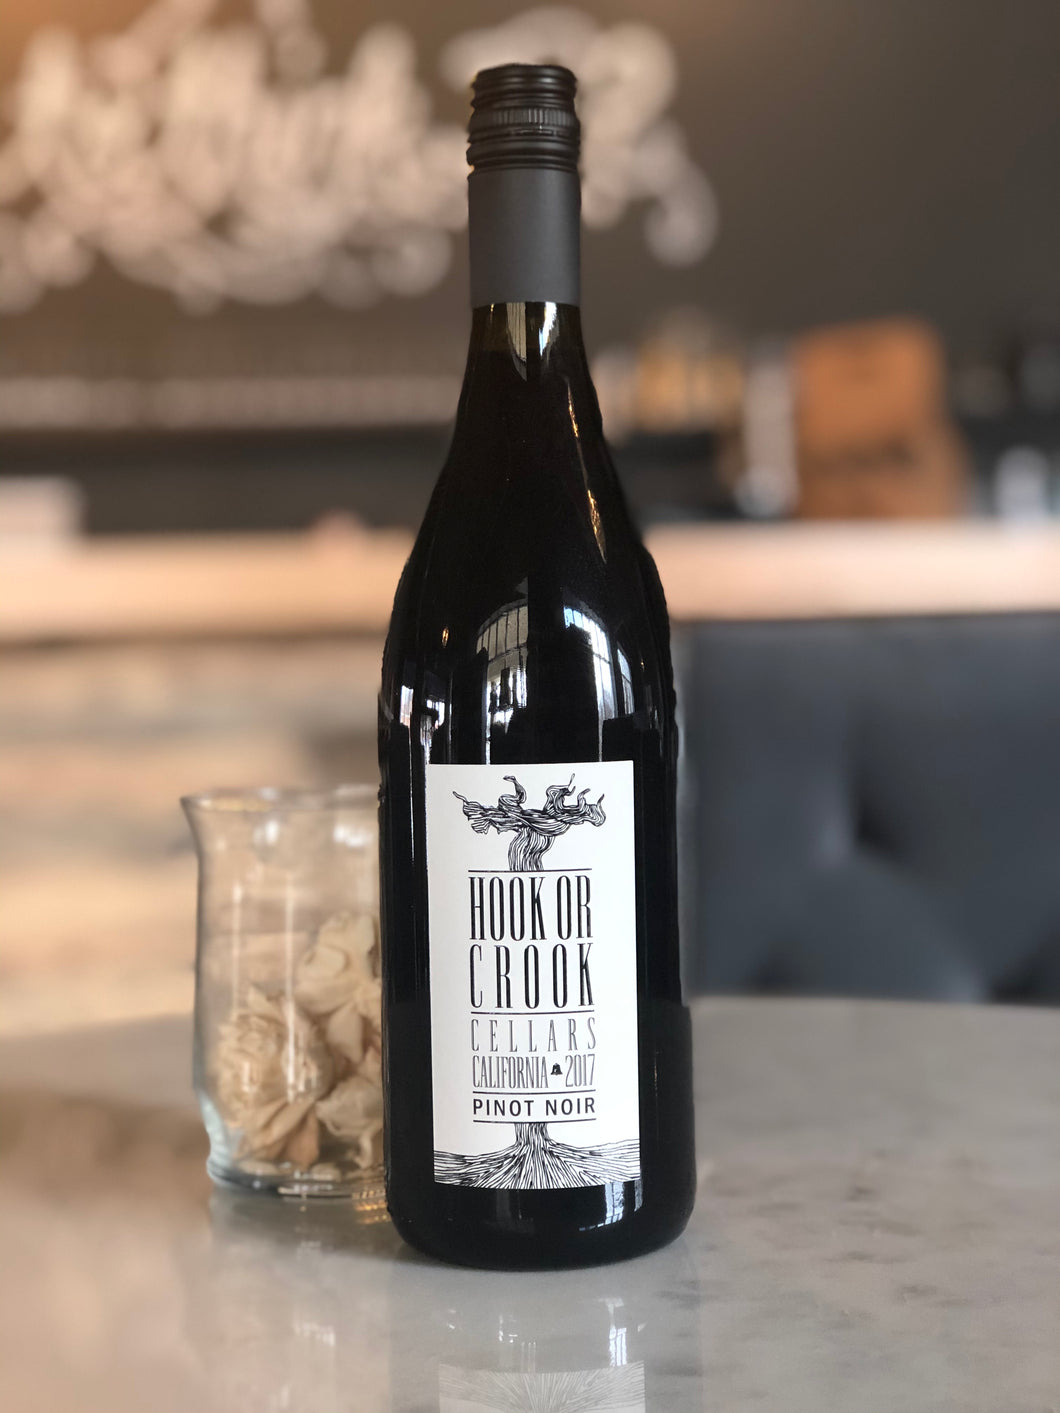 Hook or Crook California Pinot Noir, 2018